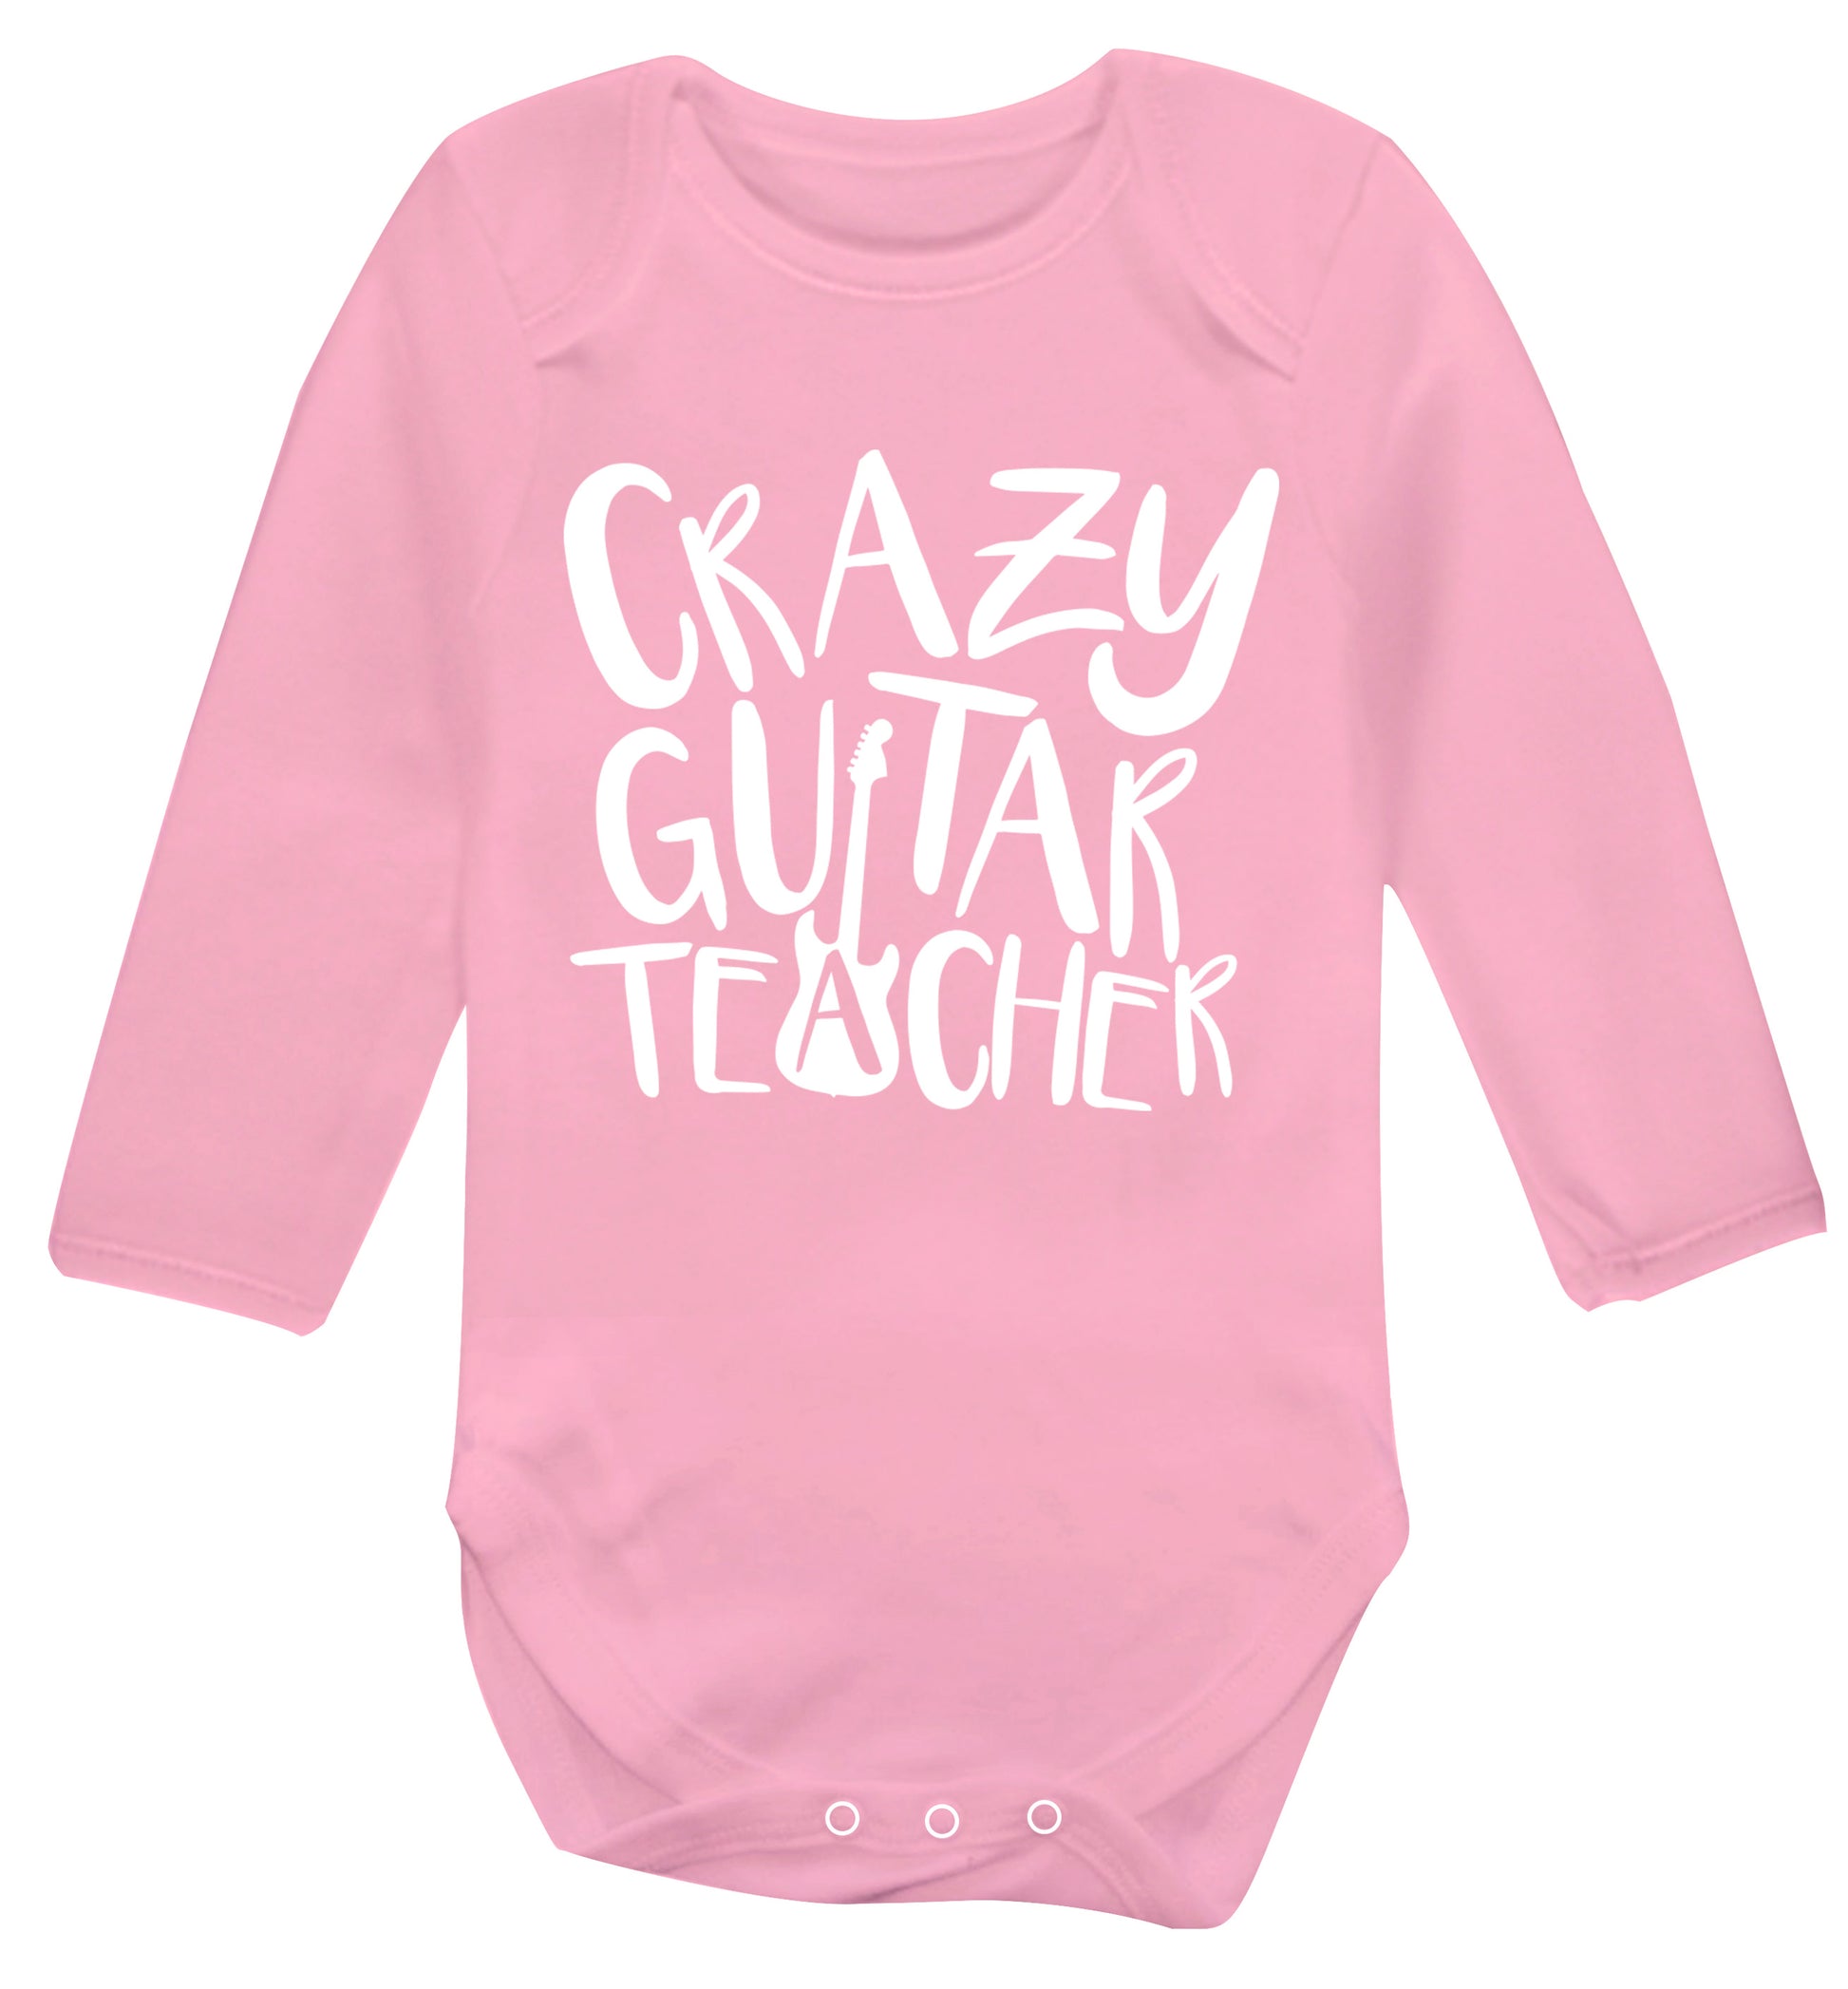 Crazy guitar teacher Baby Vest long sleeved pale pink 6-12 months